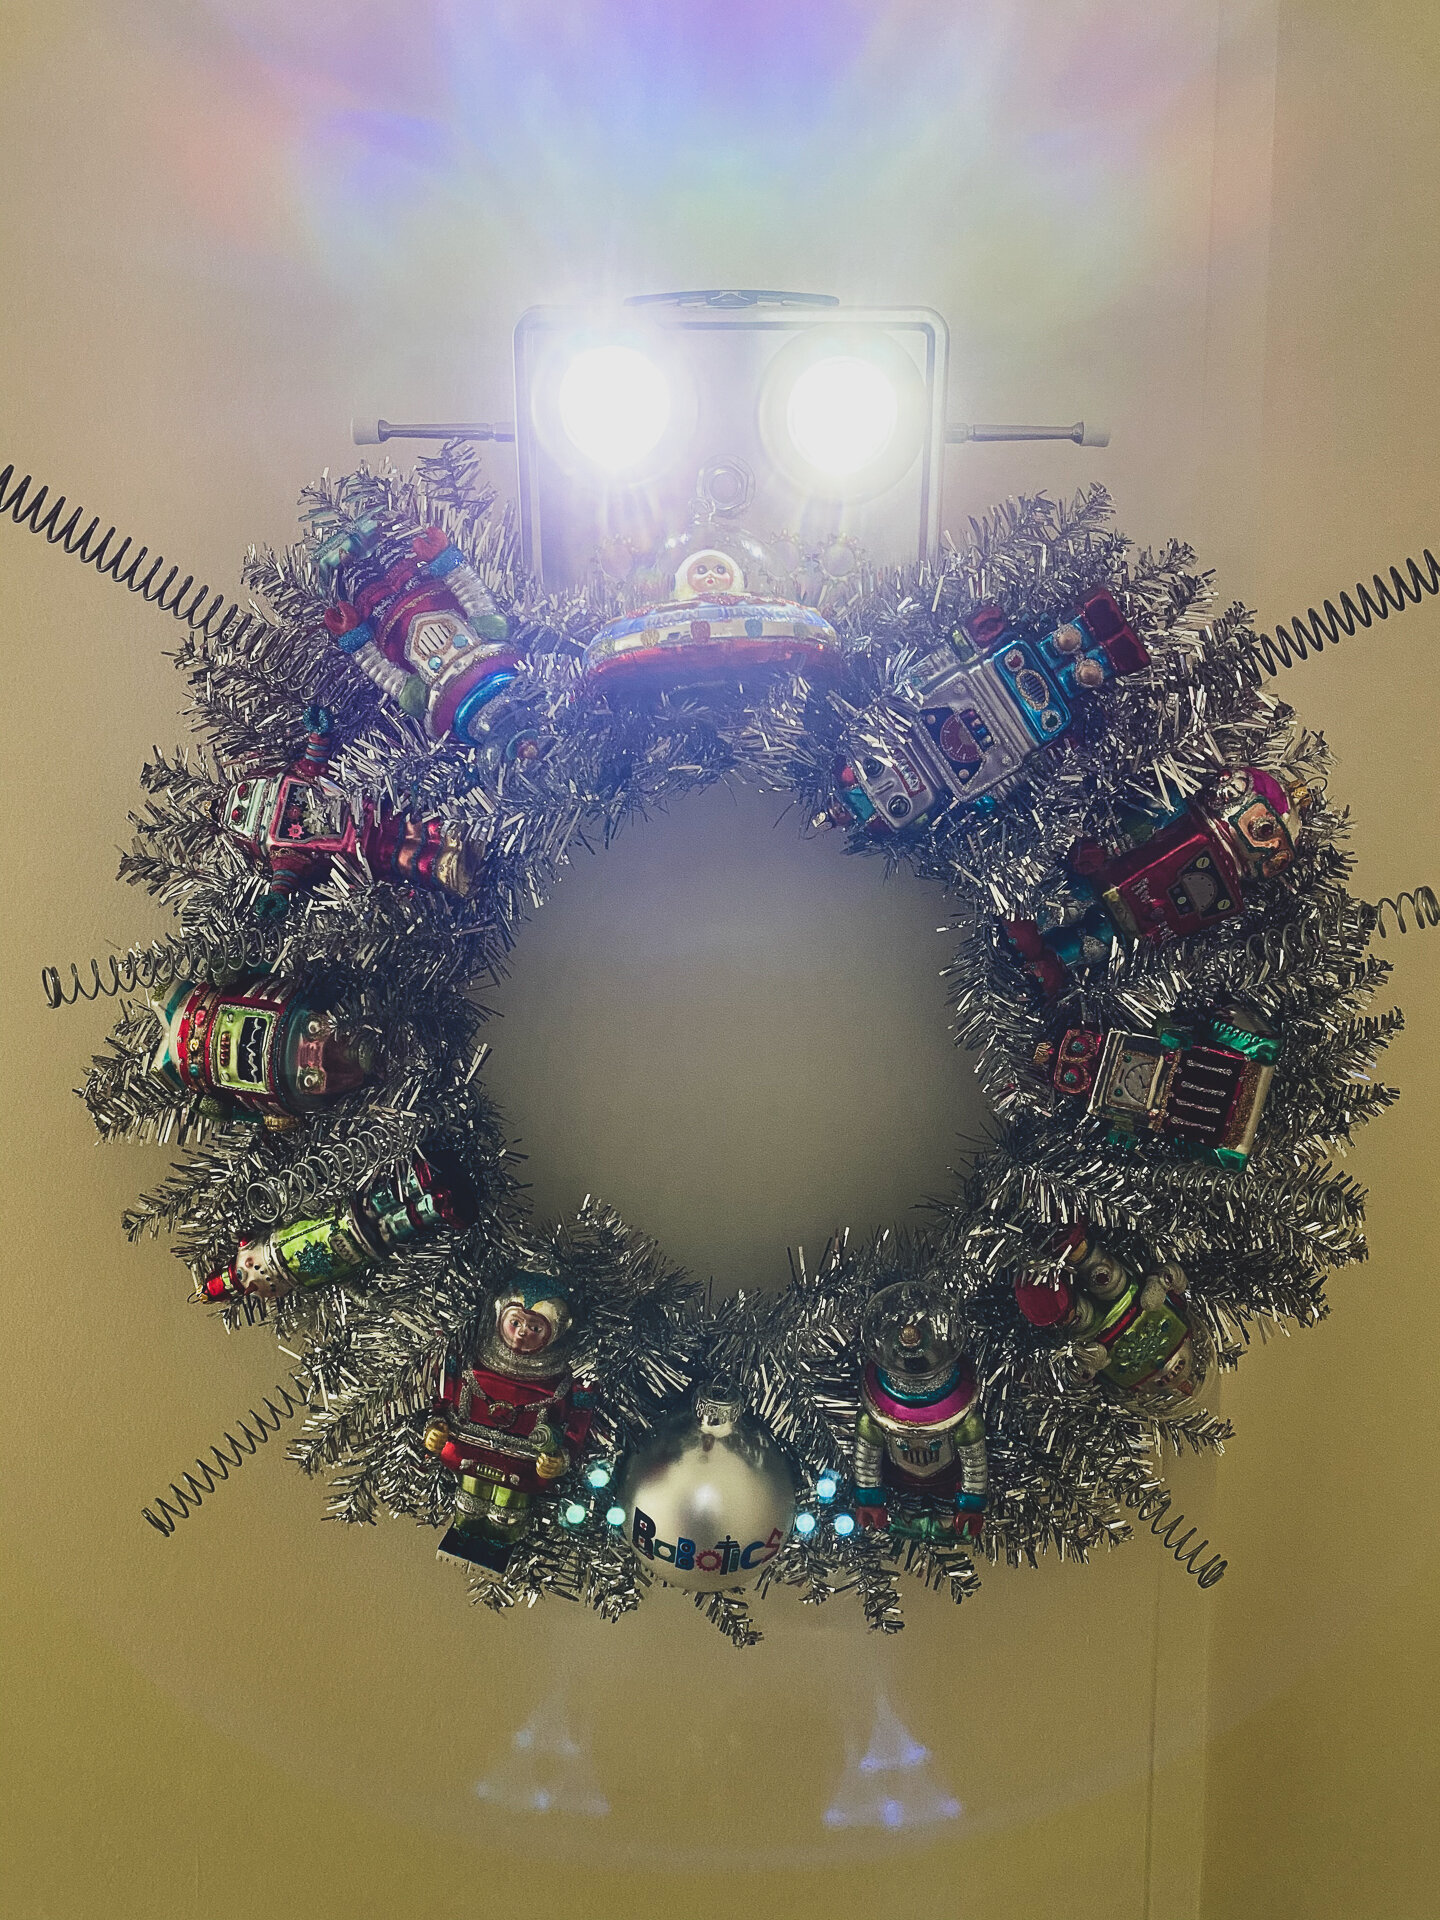 Robot Wreath by Kiriosities.jpg